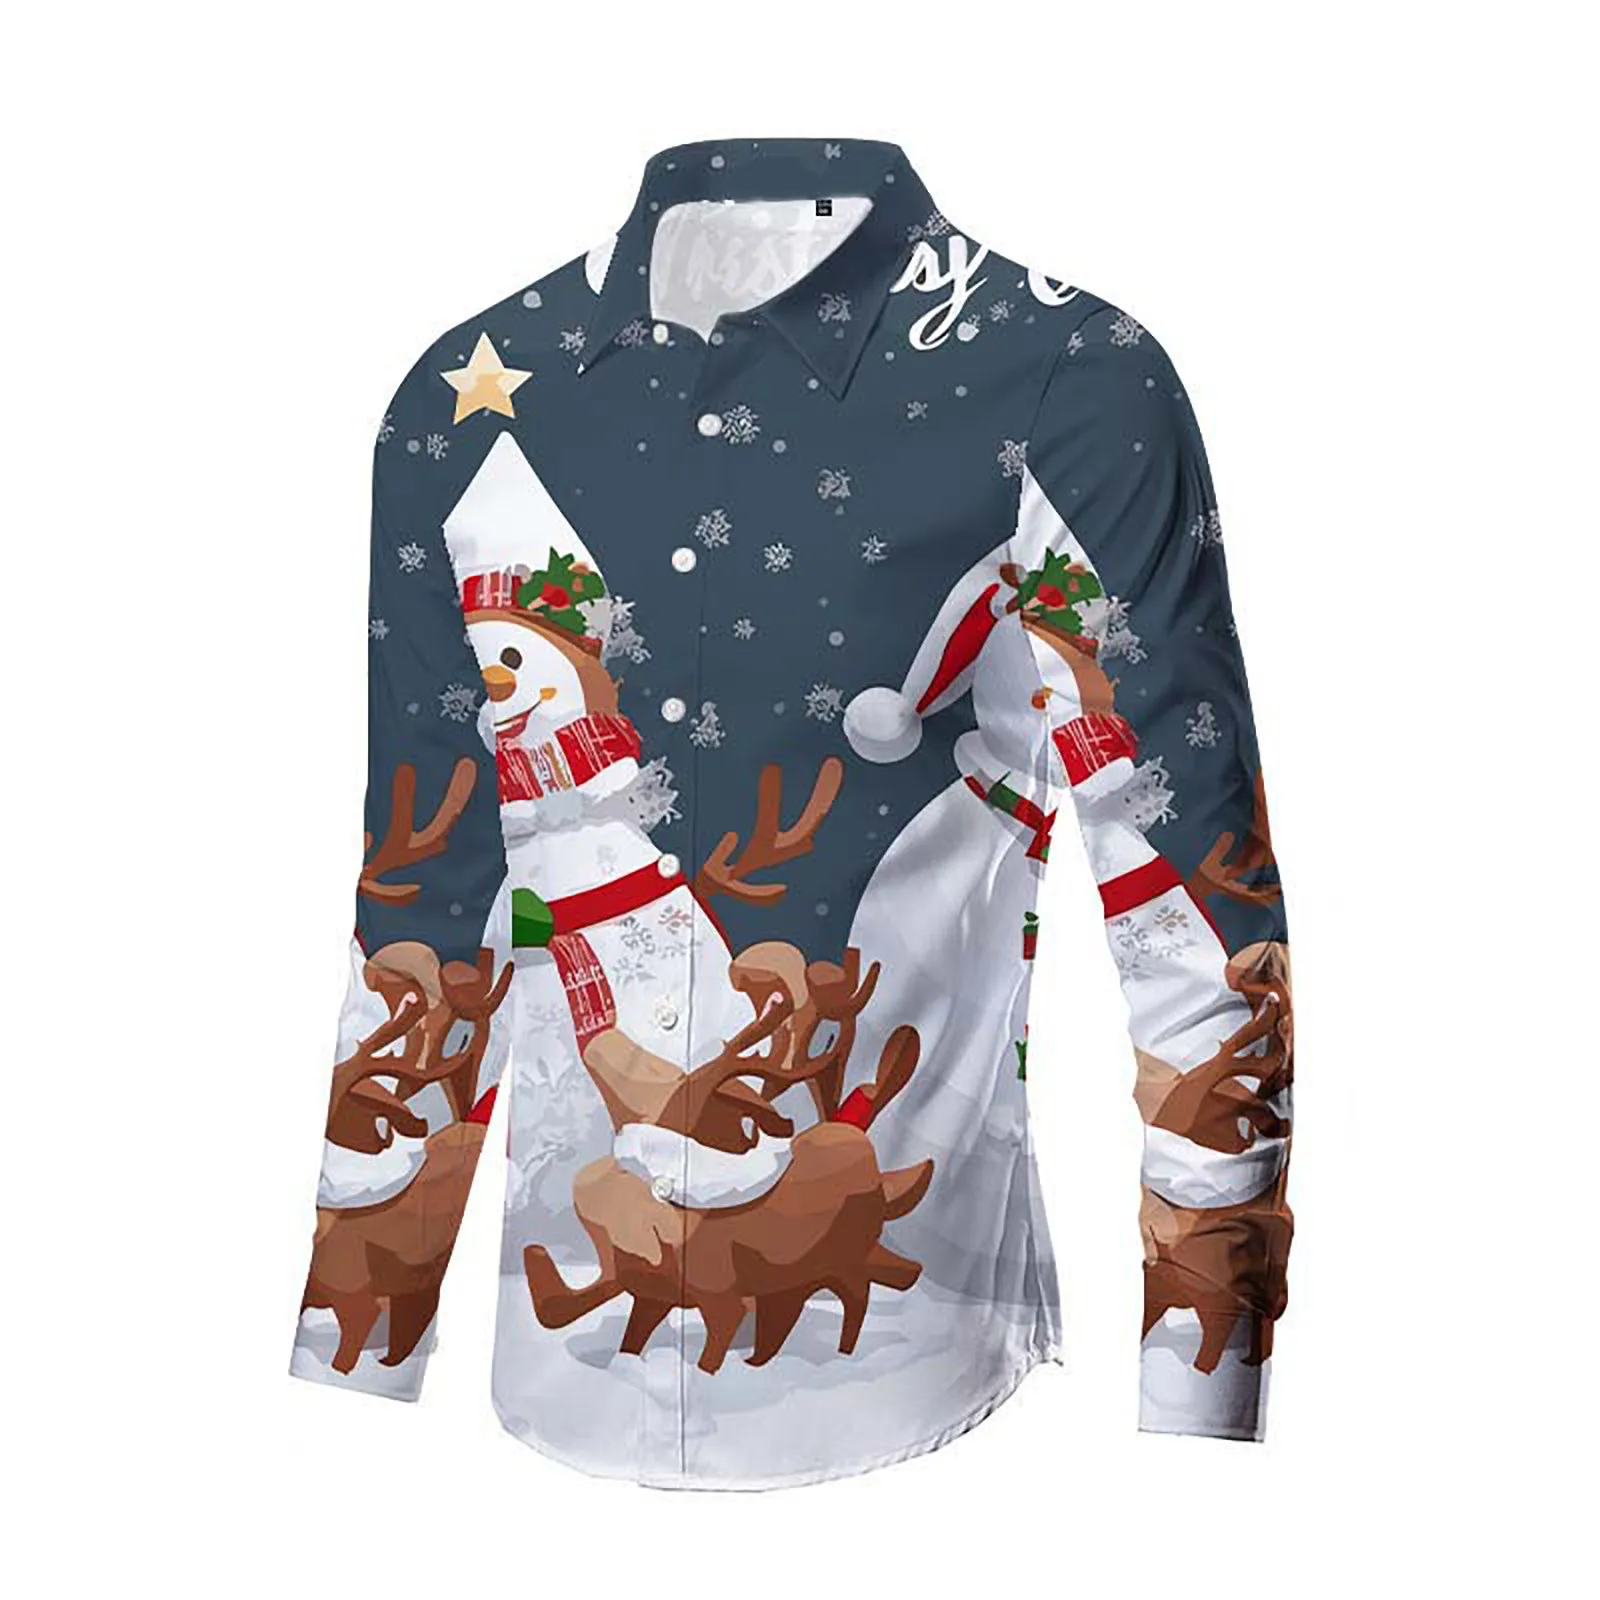 

Men'S Christmas Shirts Funny Tops Cartoon T-Shirt Navidad Slim Vacation Shirt Lapel-Neck Snowman Graphic Long-Sleeved Chemise